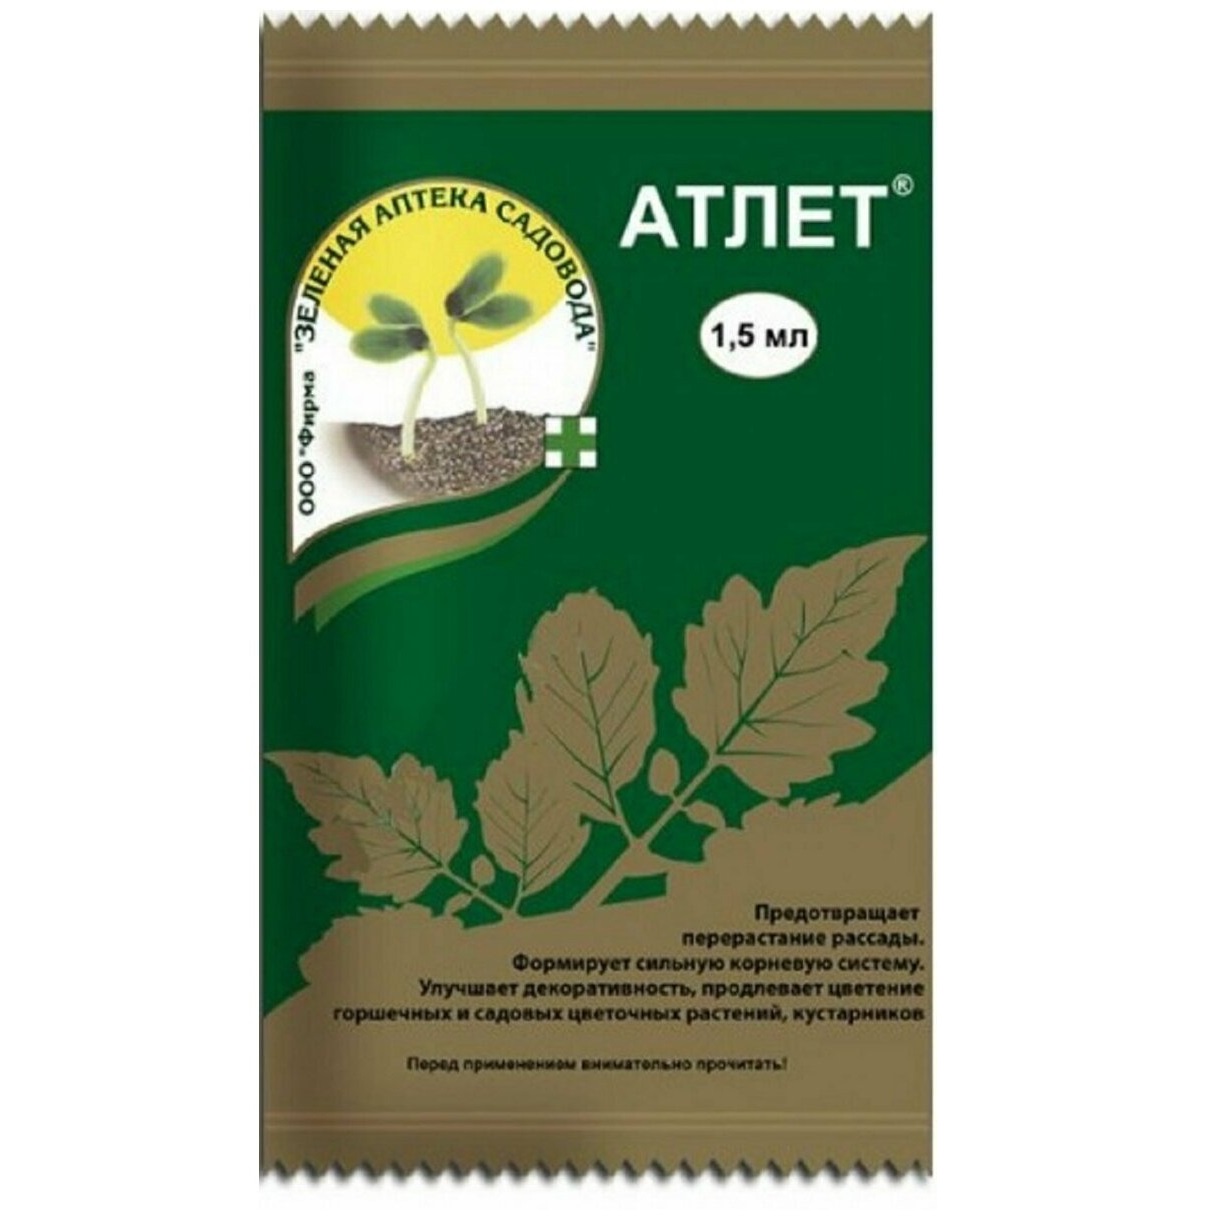 Зеленая аптека садовода Атлет 1.5 мл